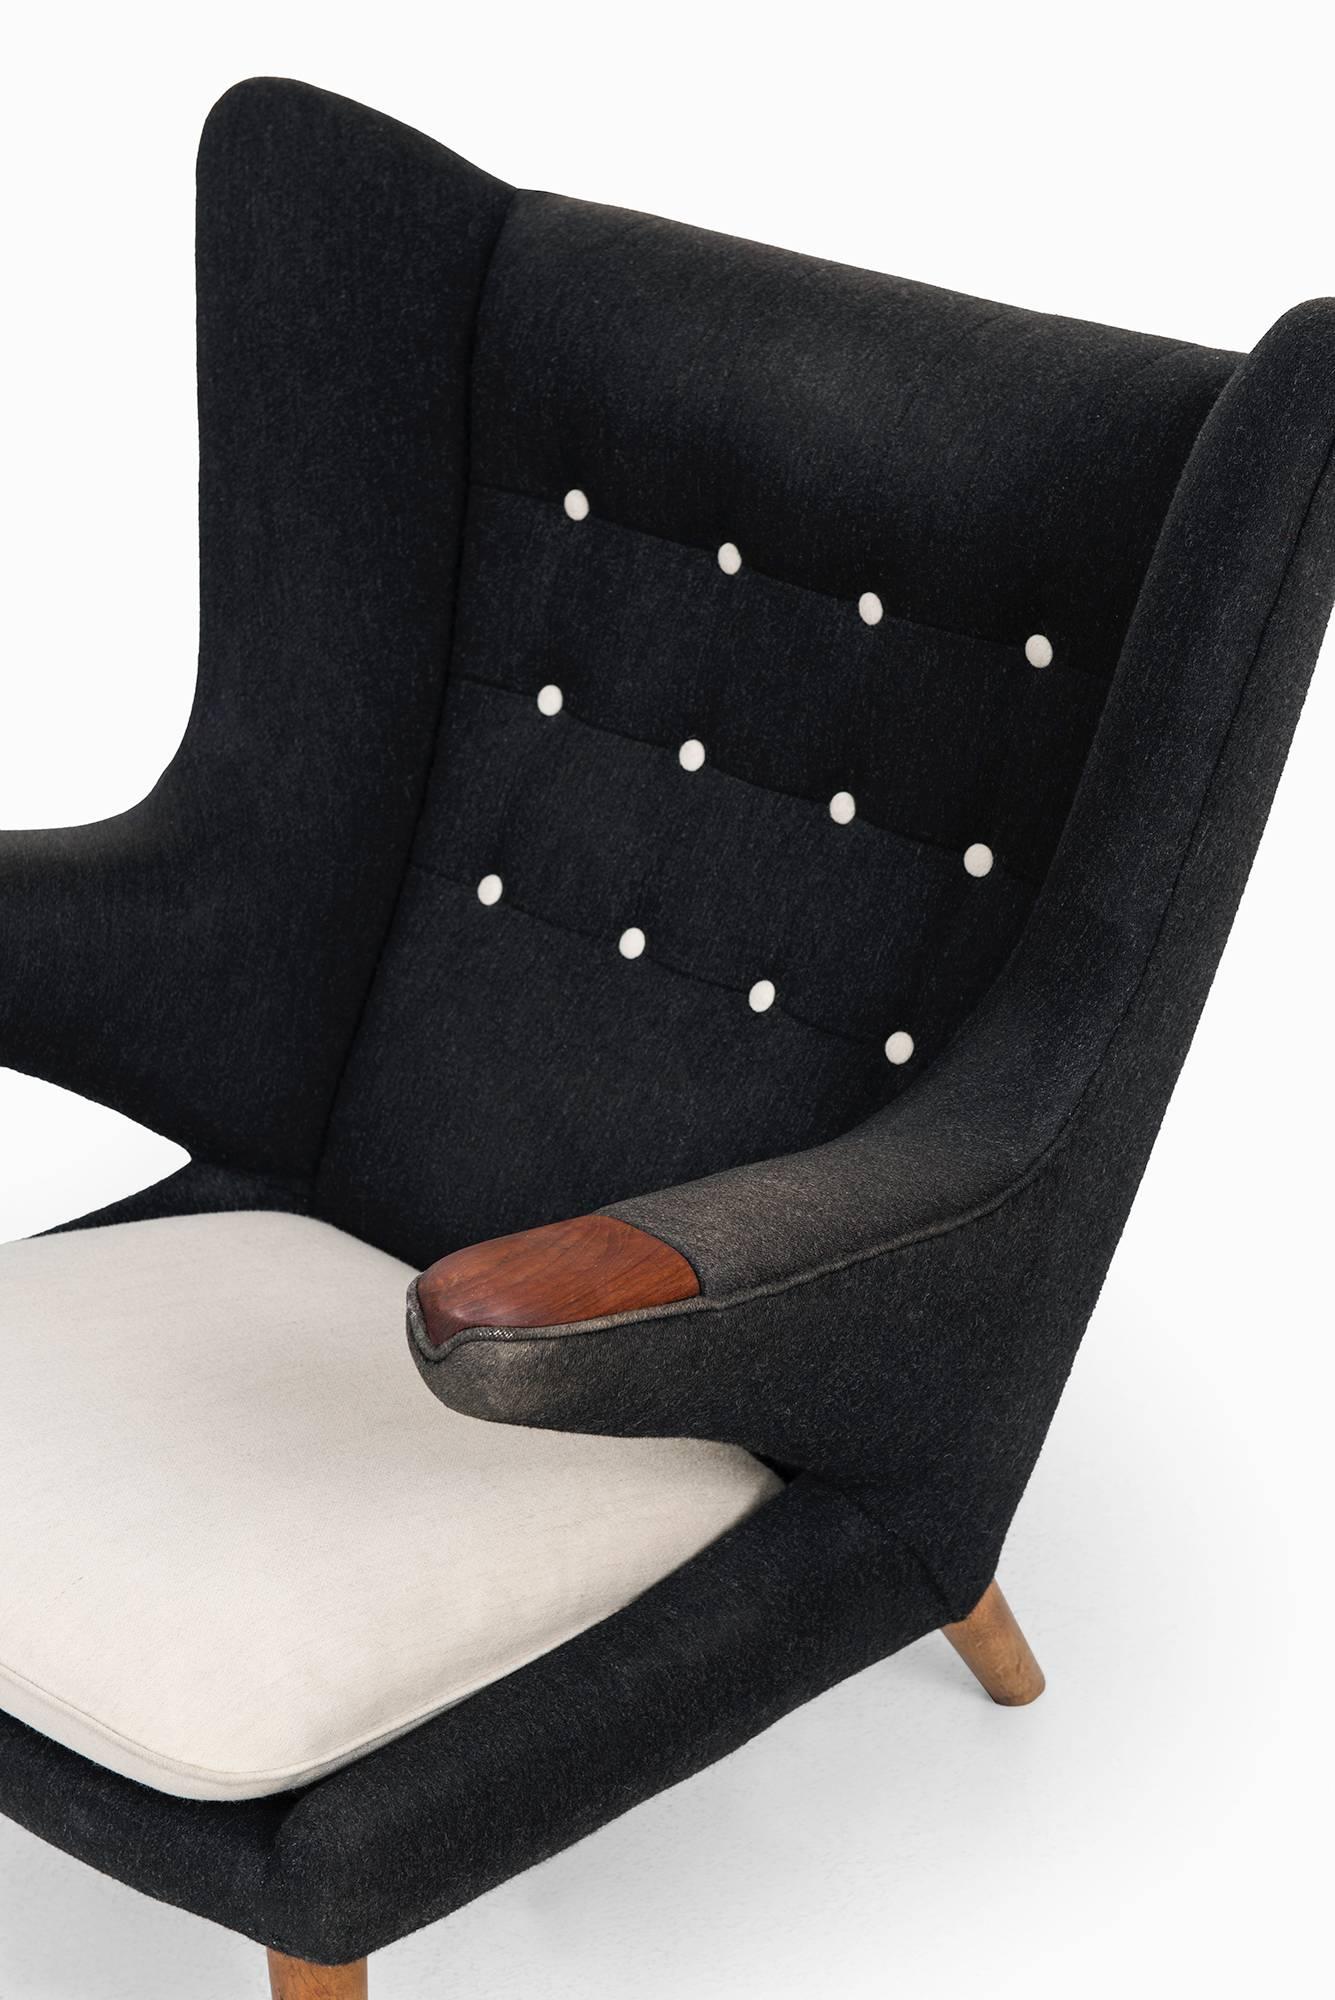 Fabric Hans Wegner Papa Bear Chair by A.P. Stolen in Denmark